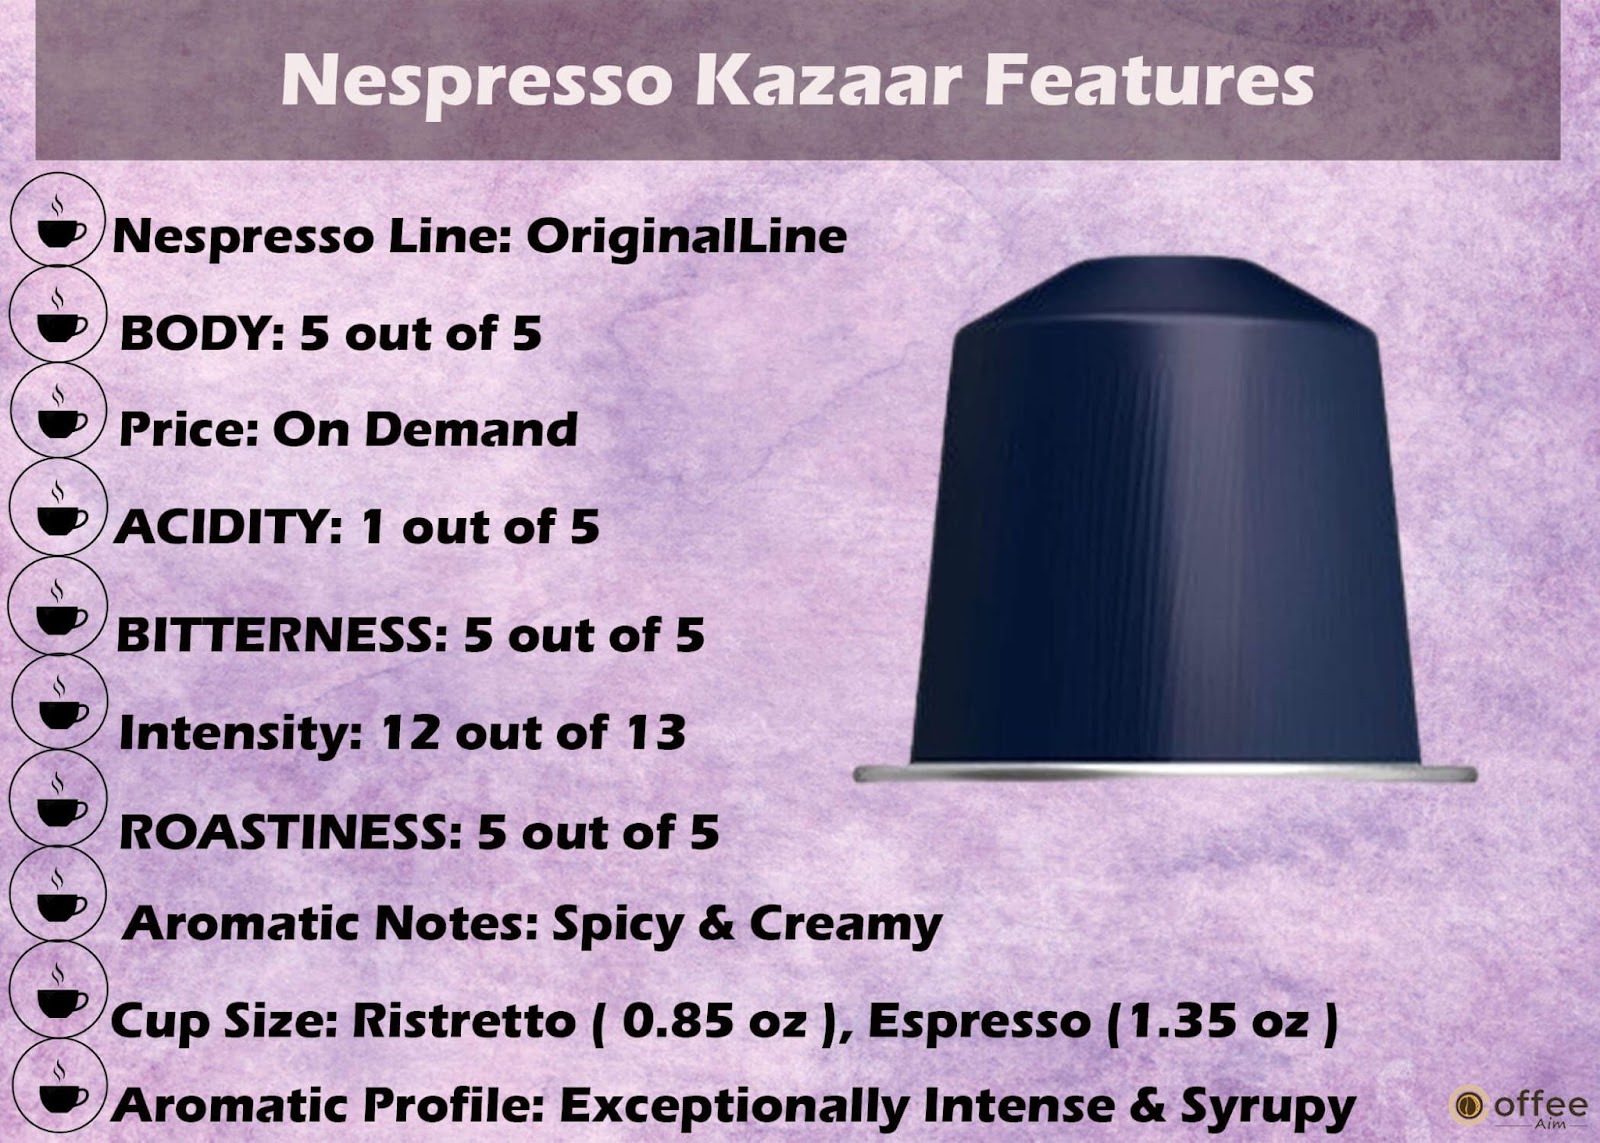 Features Chart of Nespresso Kazaar OriginalLine Capsule.